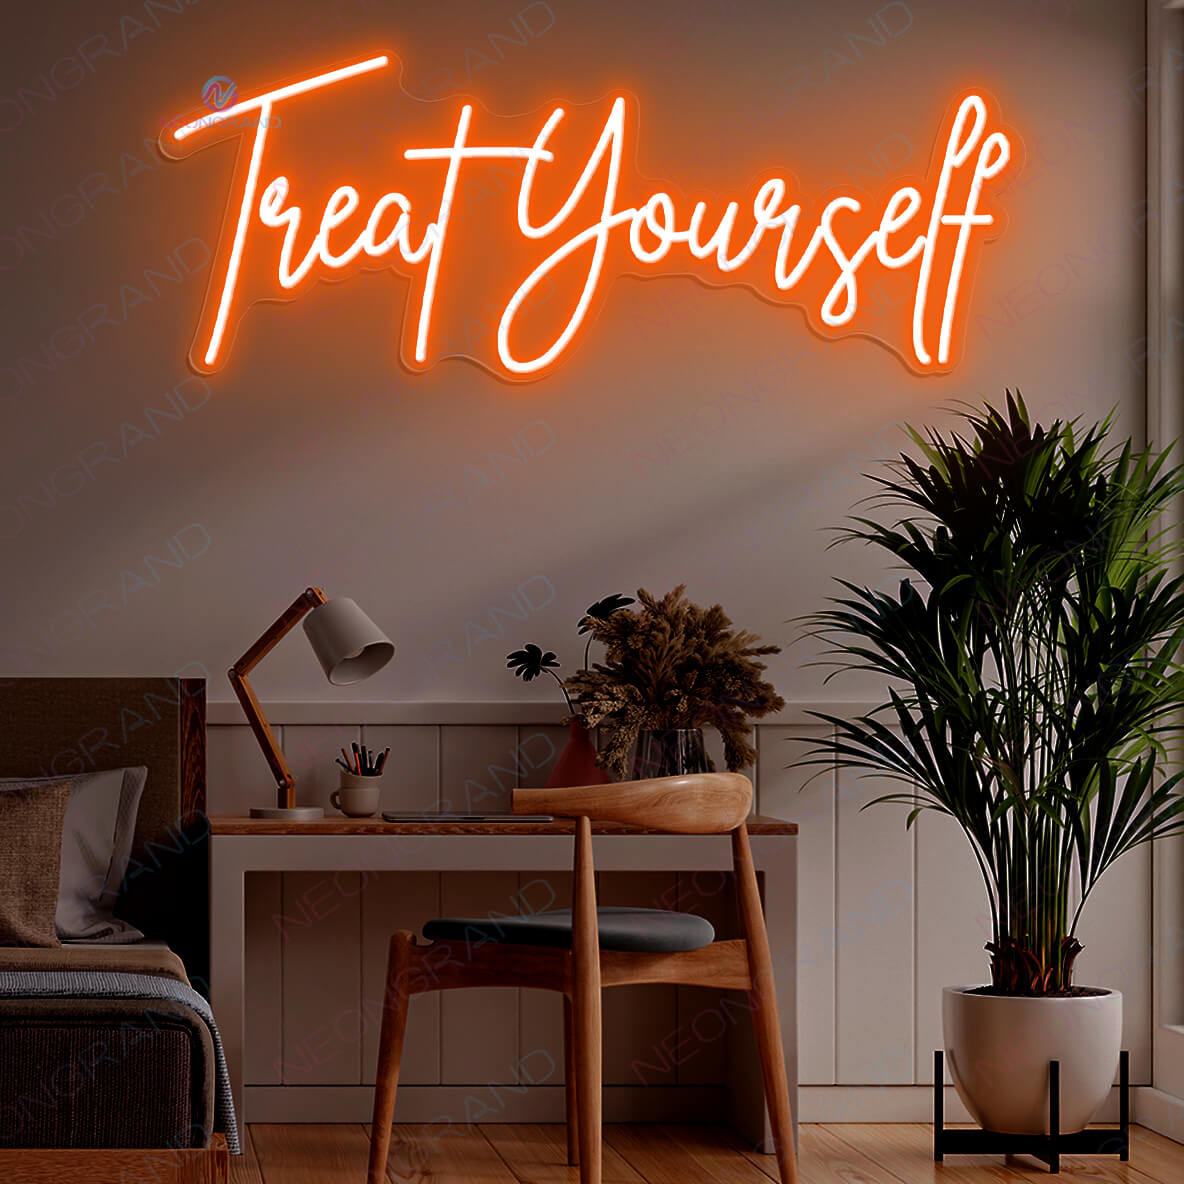 Treat Yourself Neon Sign Motivation Led Light orange